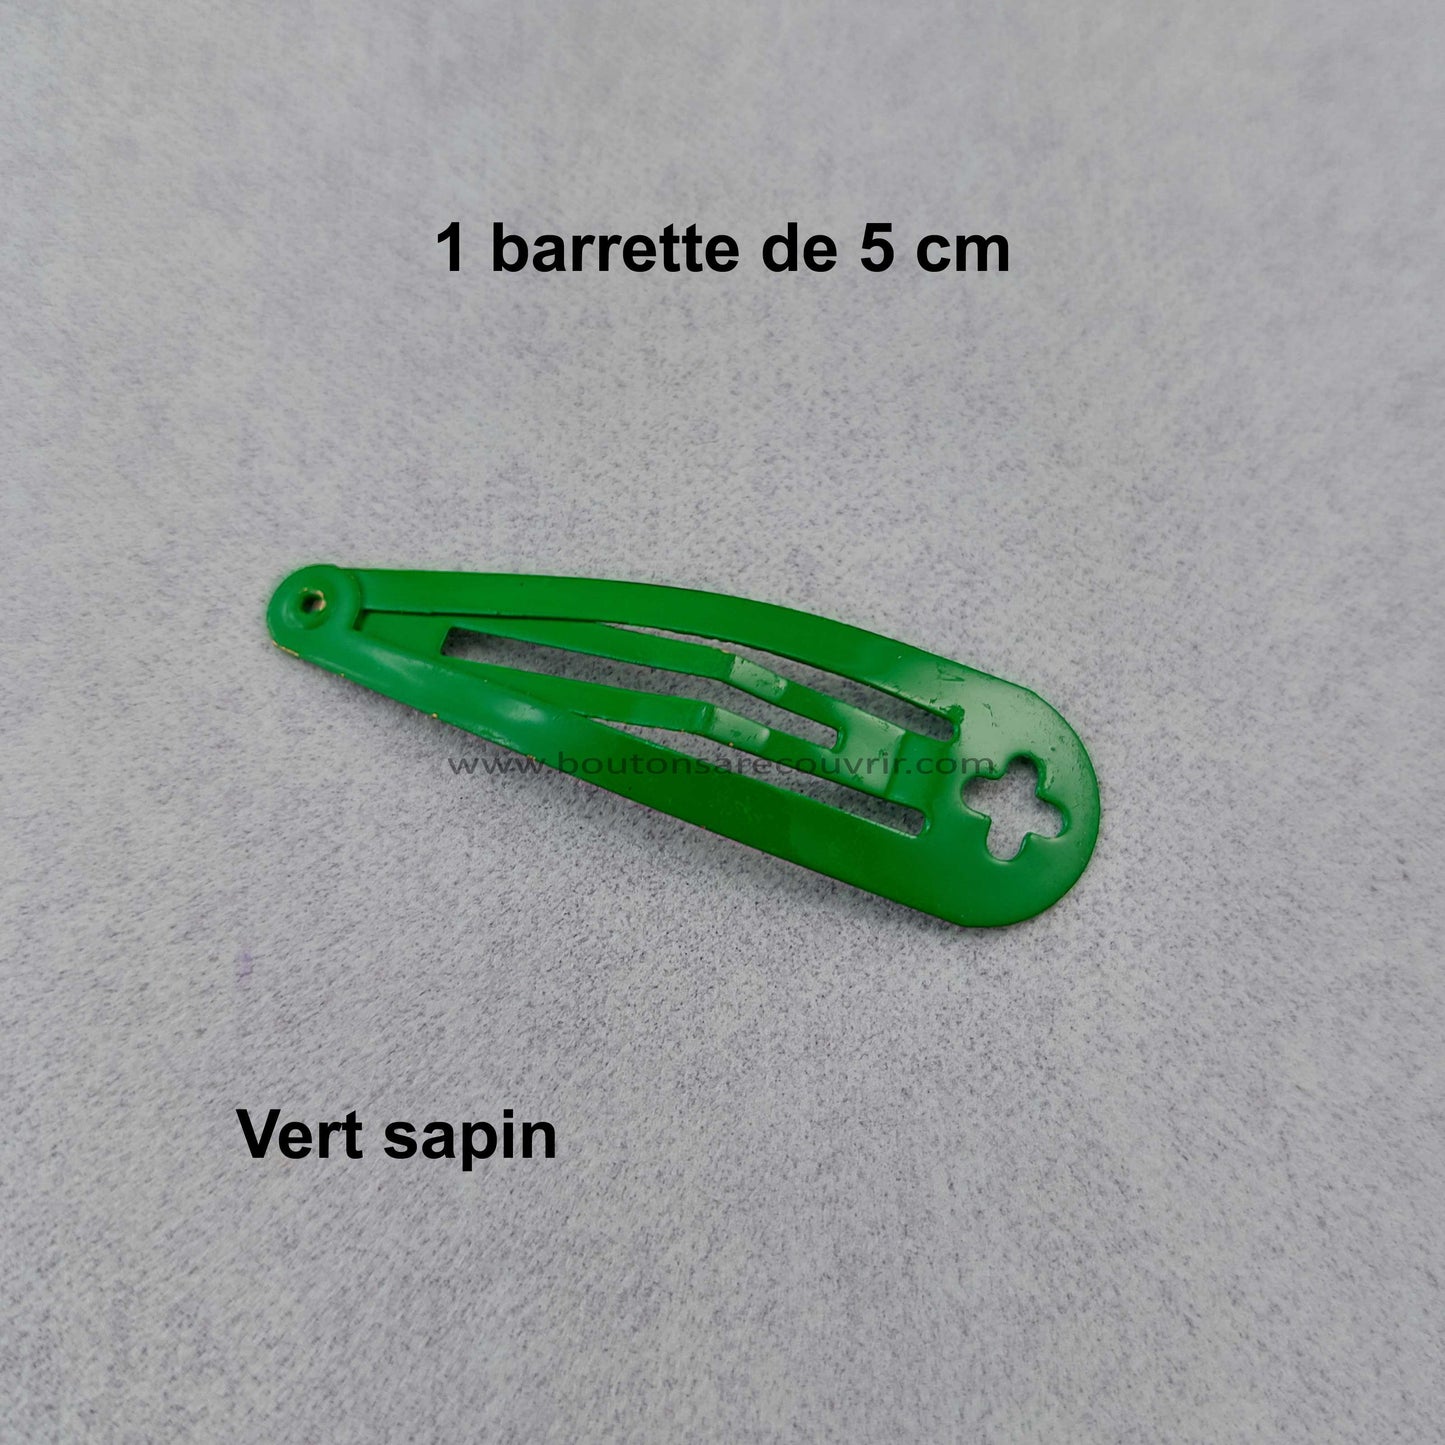 1 barrette de 5 cm - bouton à recouvrir 19 ou 23 mm - VERT SAPIN